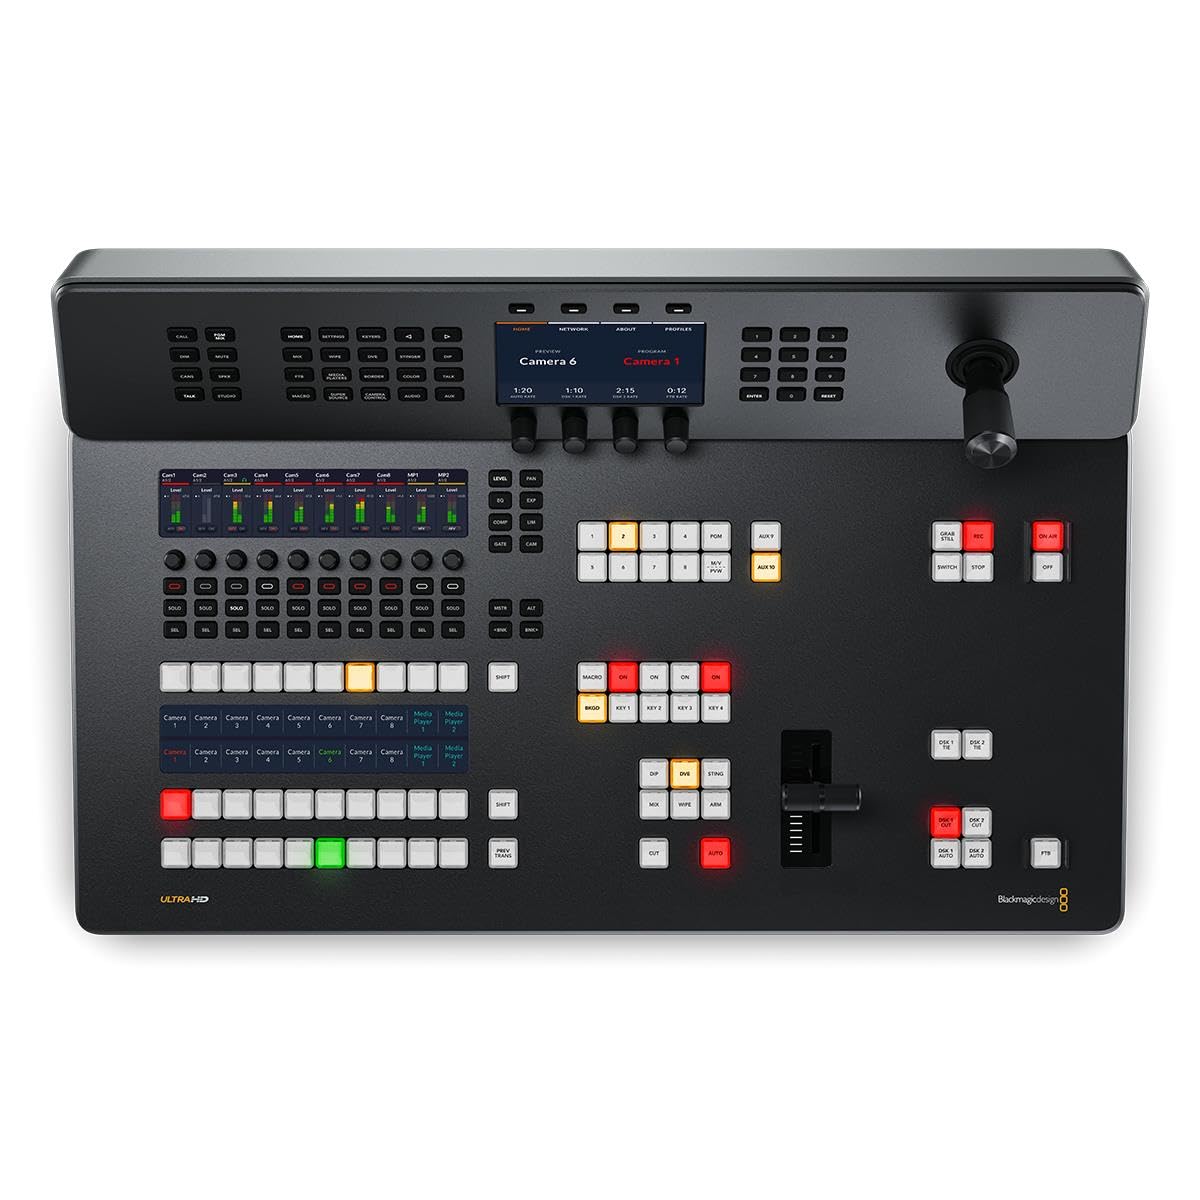 Blackmagic Design ATEM Television Studio 4K8 Ultra HD Live Production Switcher